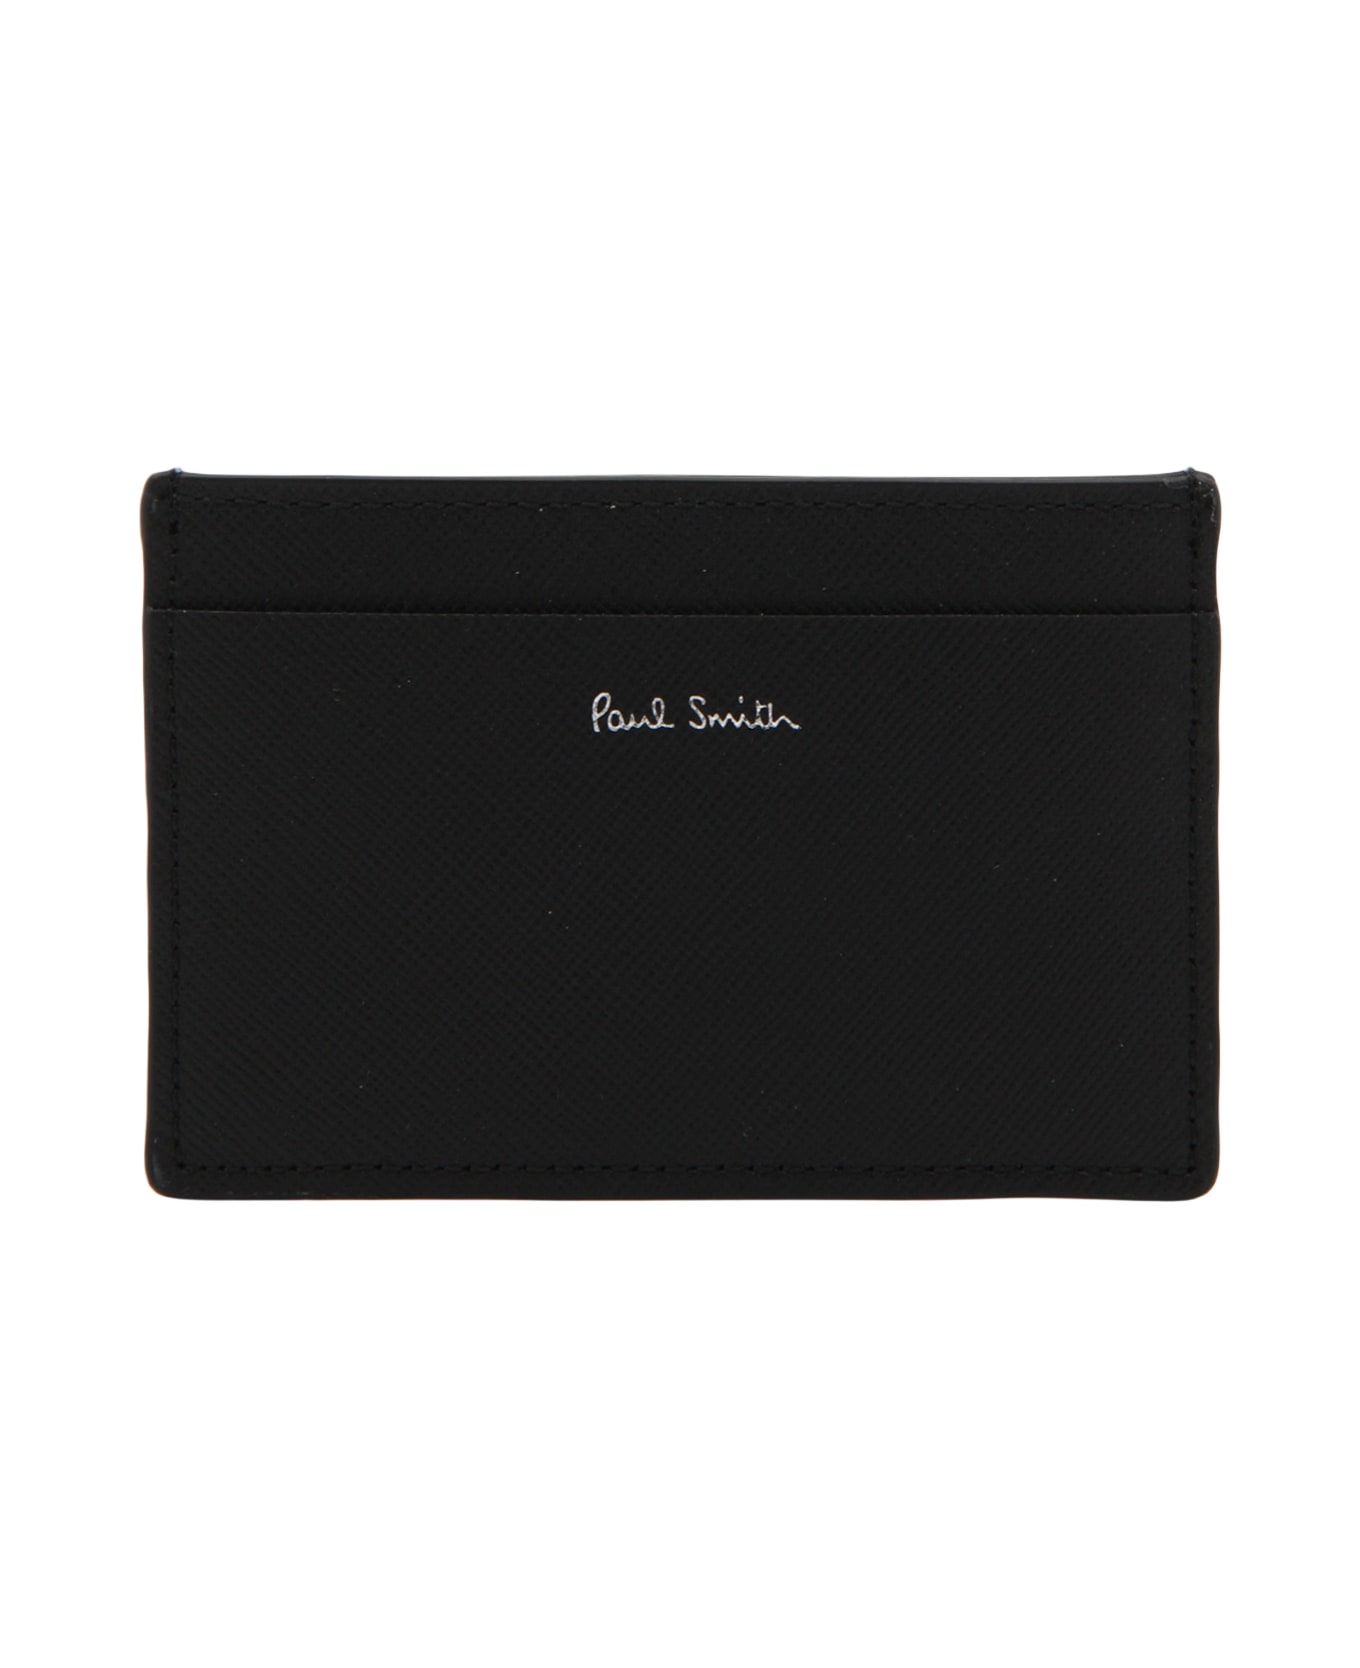 Paul Smith Black Multicolour Leather Cardholder - Black